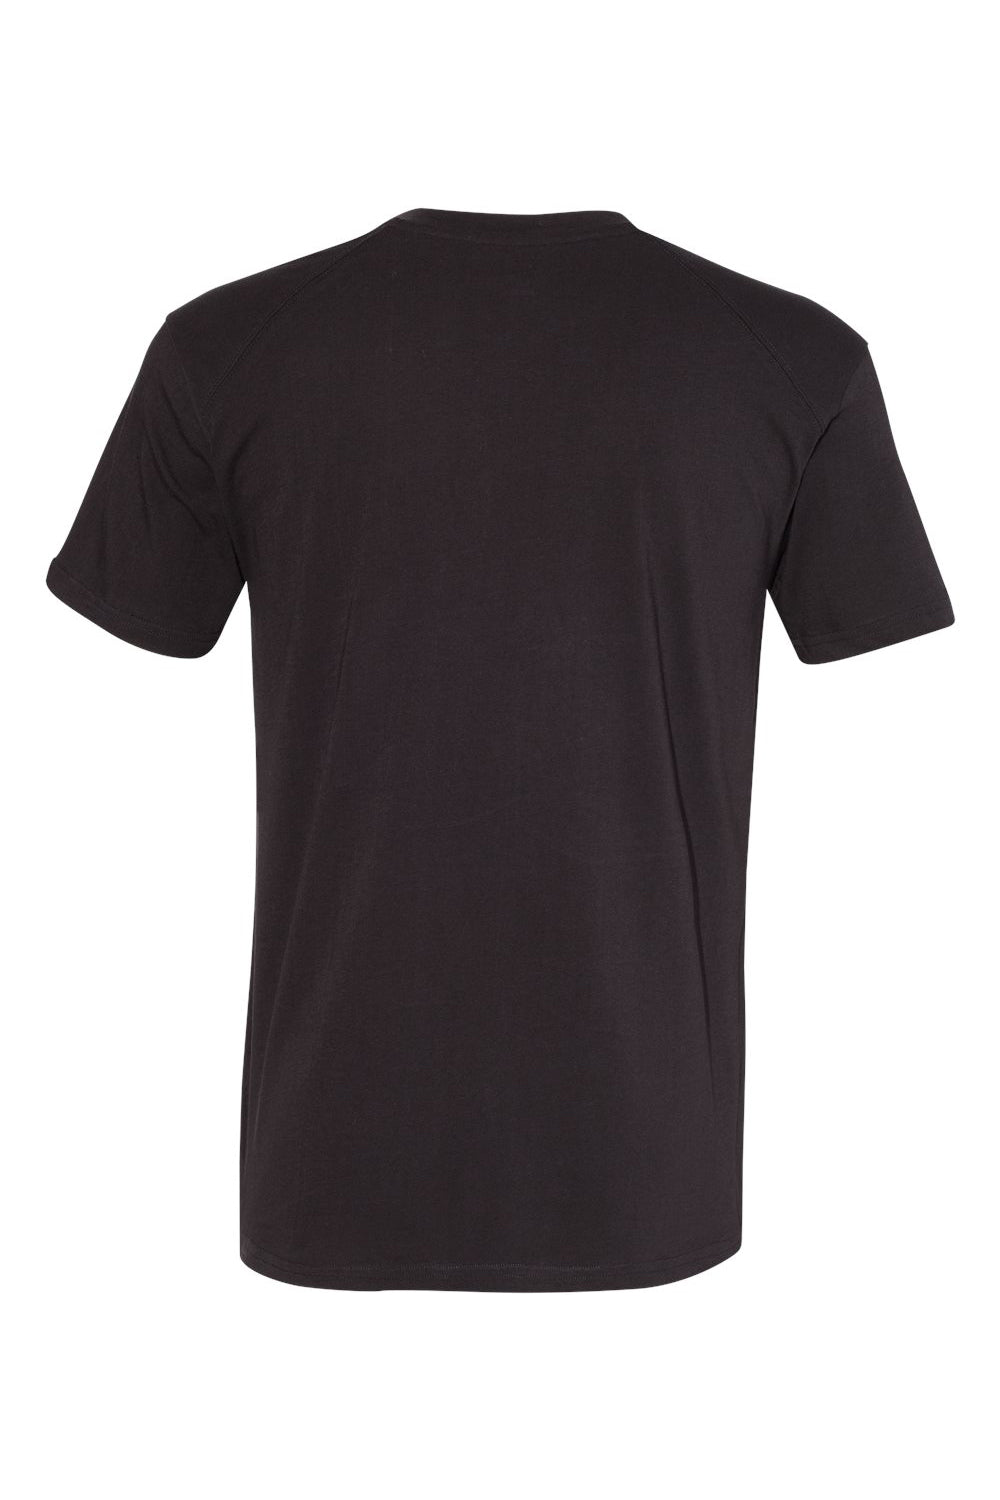 Badger 1000 Mens FitFlex Performance Moisture Wicking Short Sleeve Crewneck T-Shirt Black Flat Back